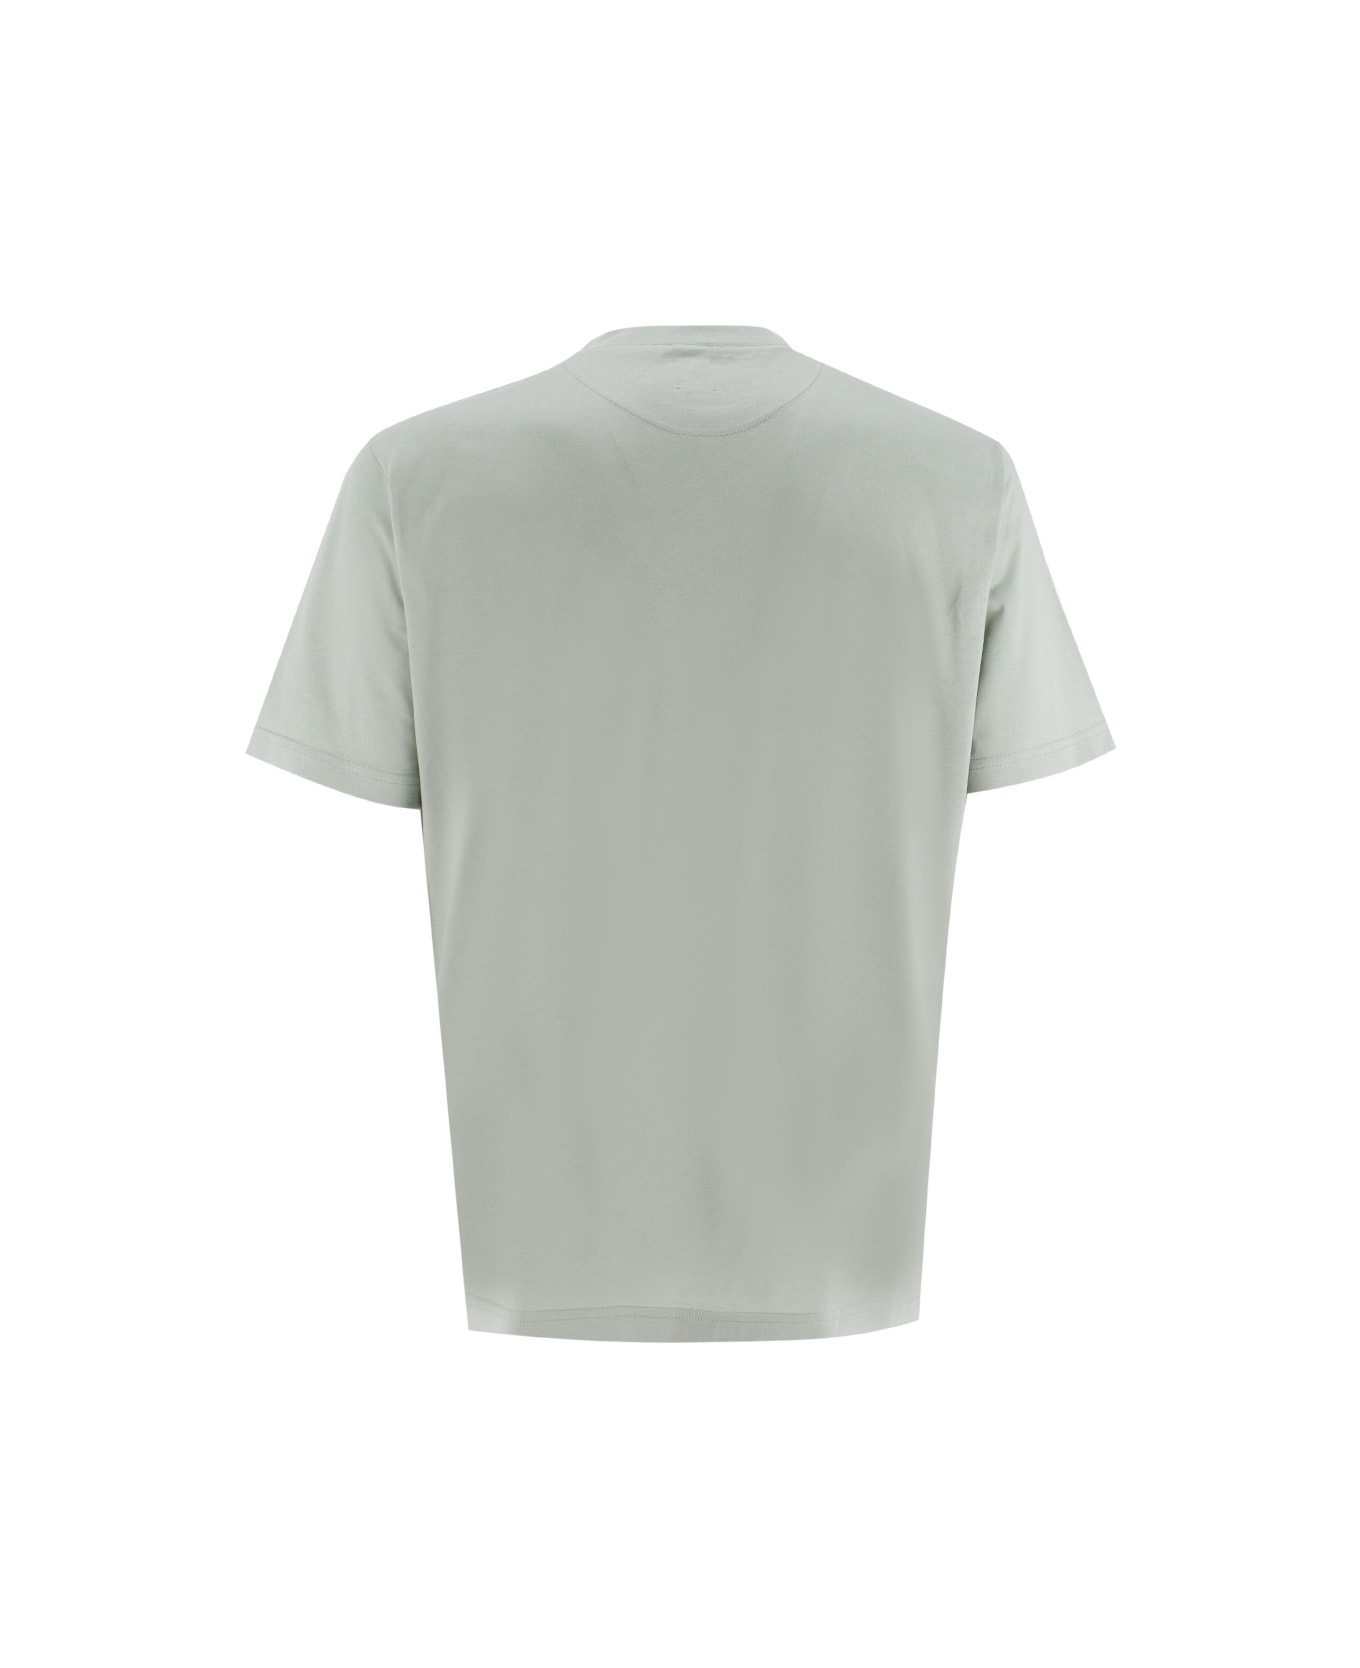 Eleventy T-shirt - SAGE AND WHITE